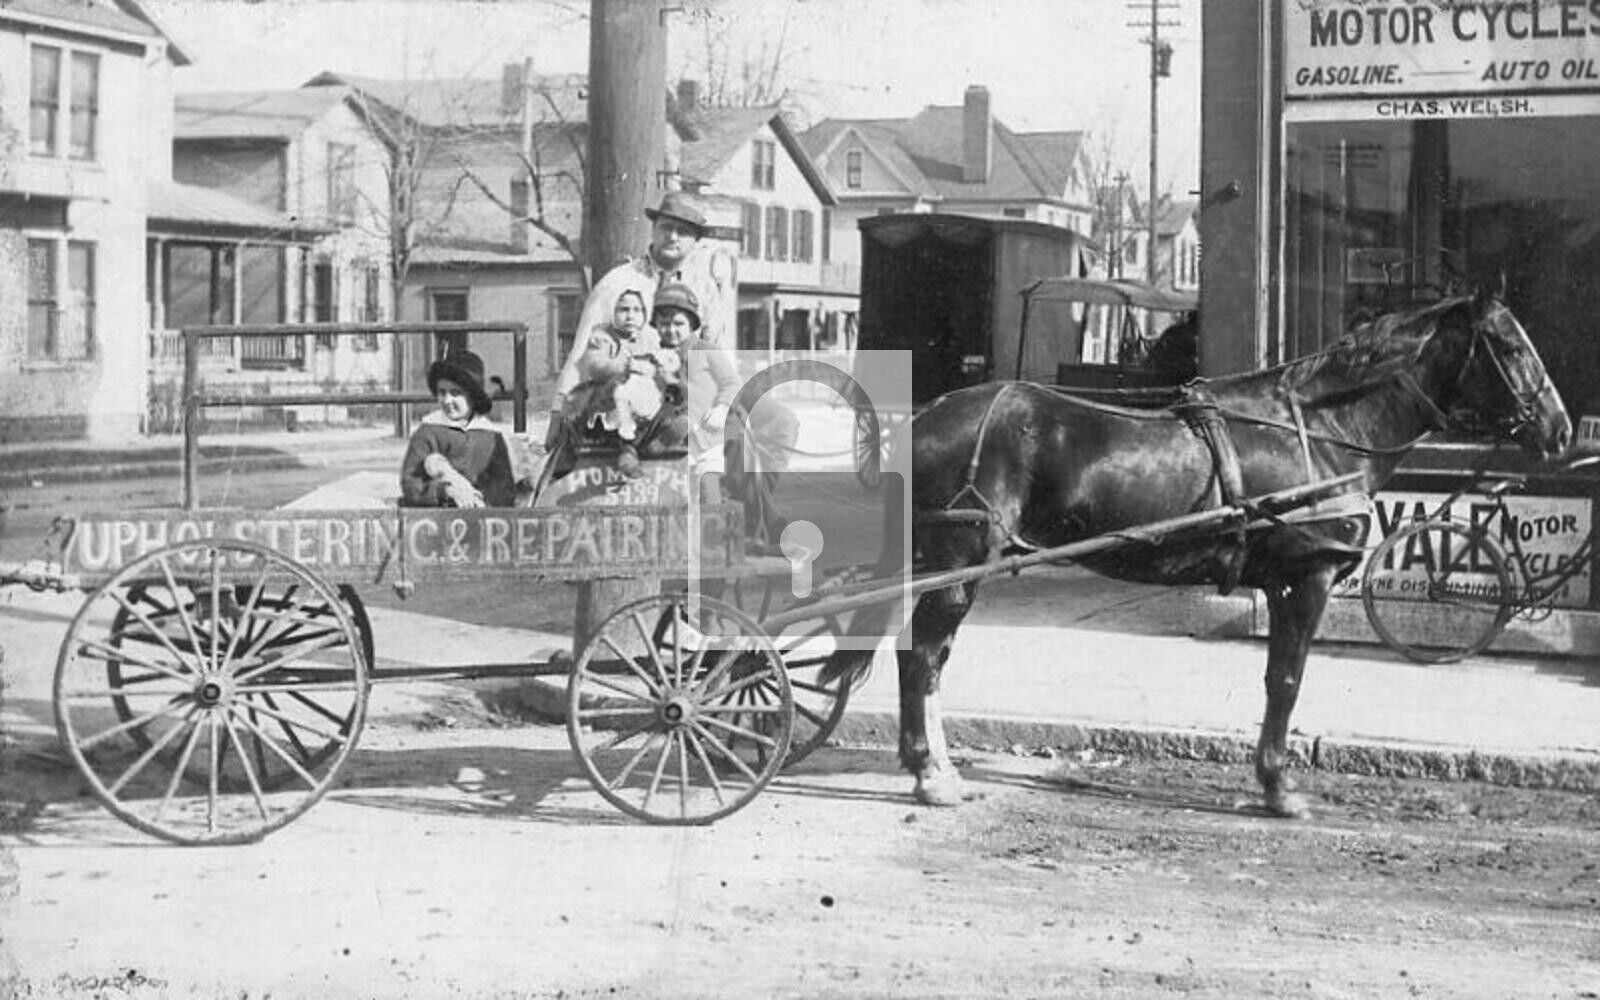 Third Street View Upholstering & Repair Wagon Dayton Ohio OH Reprint Postcard